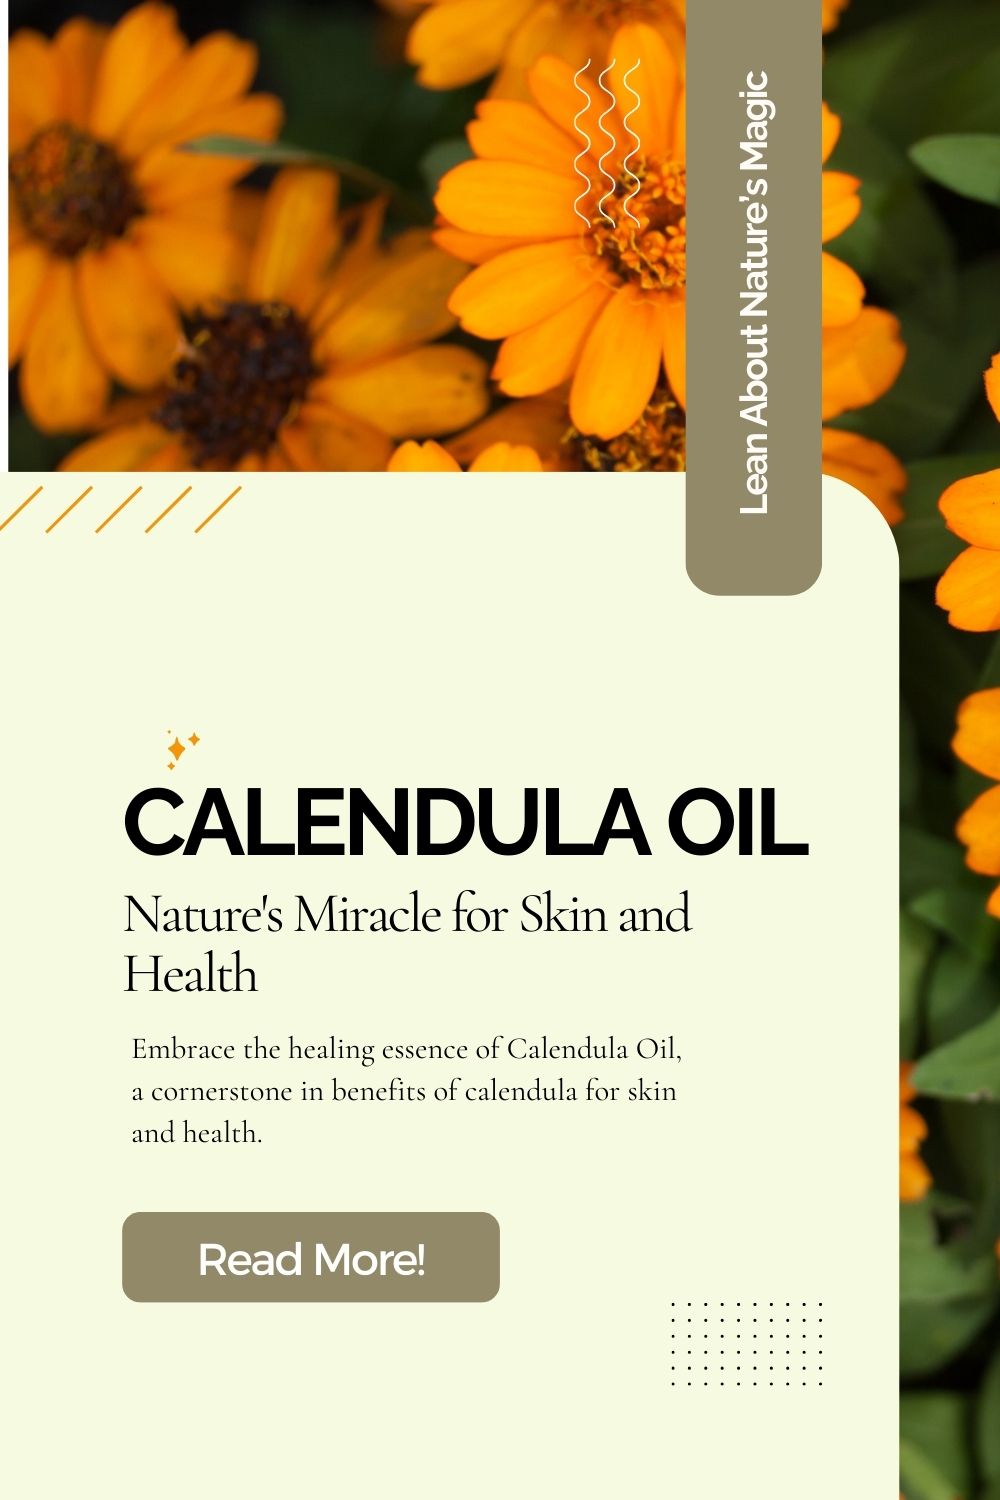 Calendula Oil in Monsuri's natural body care products.